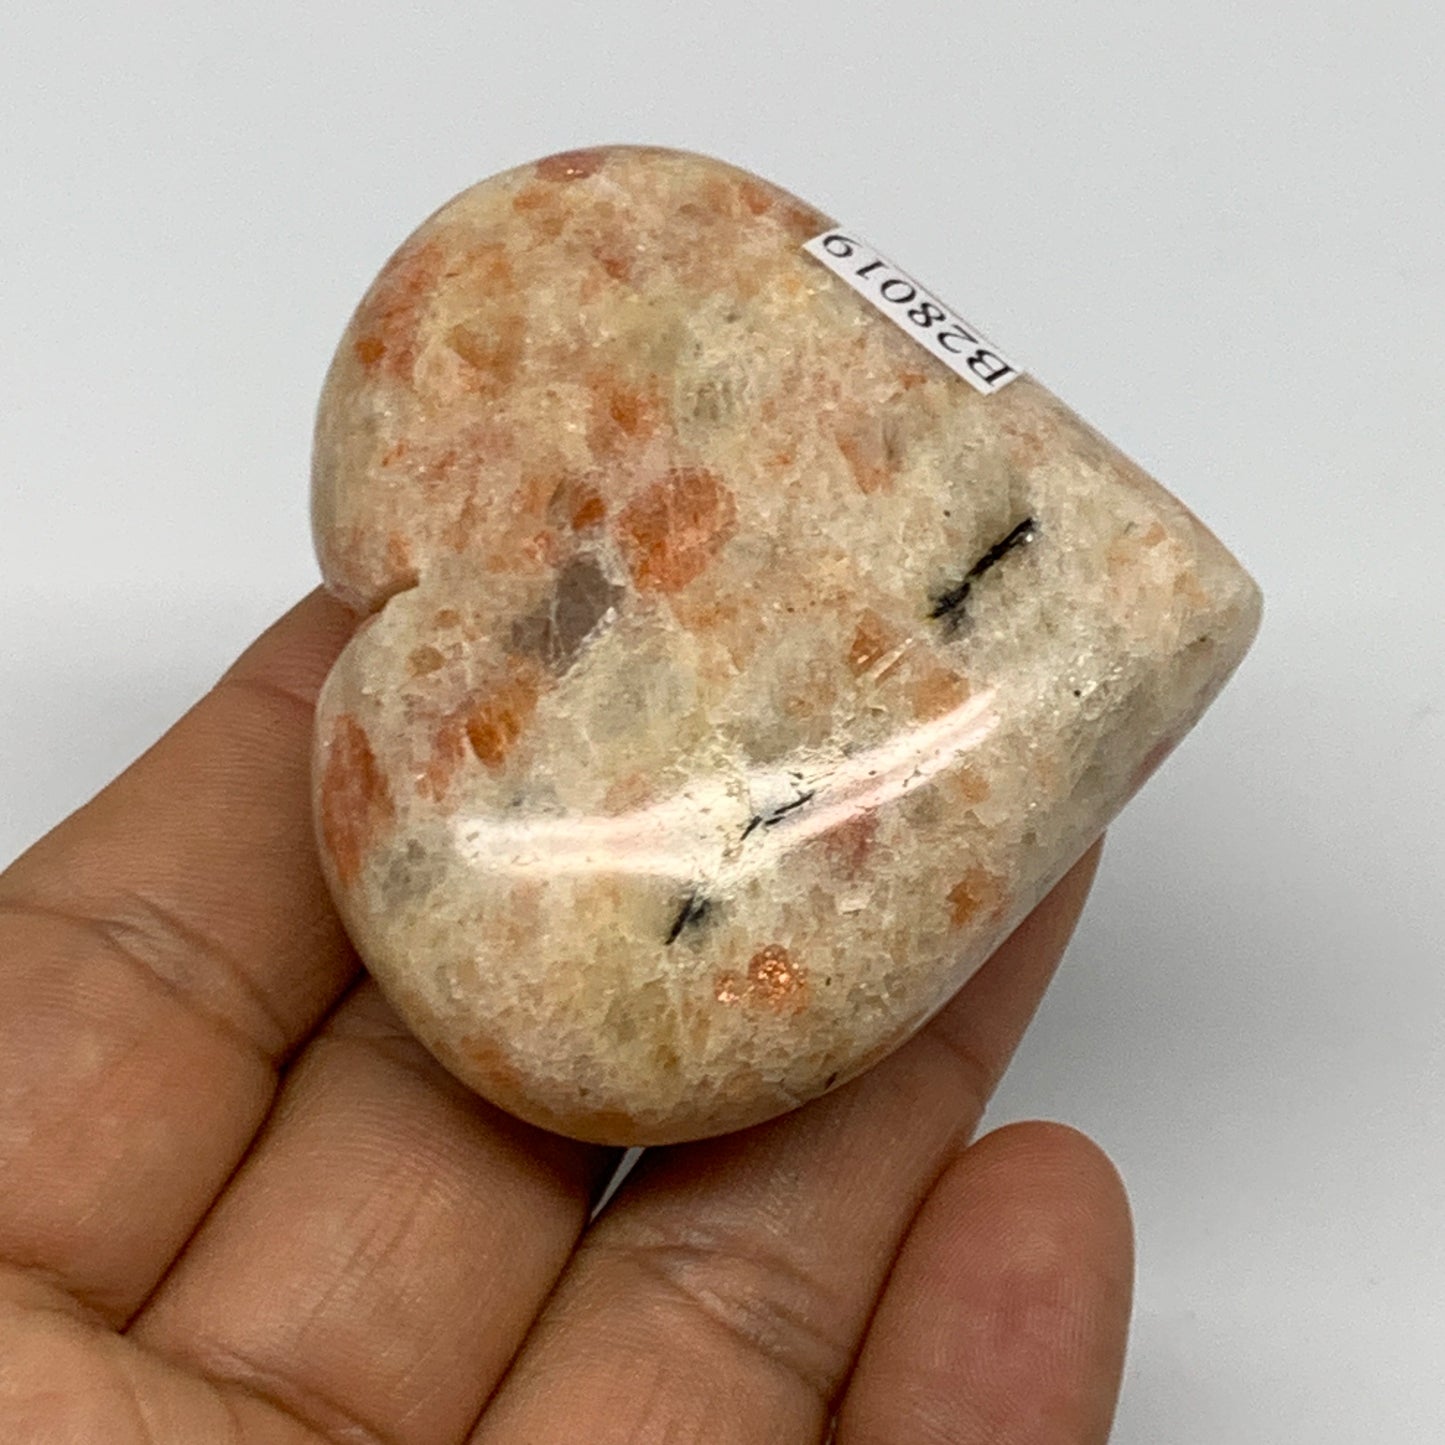 96.4g,2.1"x2.3"x0.9", Sunstone Heart Polished Healing Crystal @India, B28019